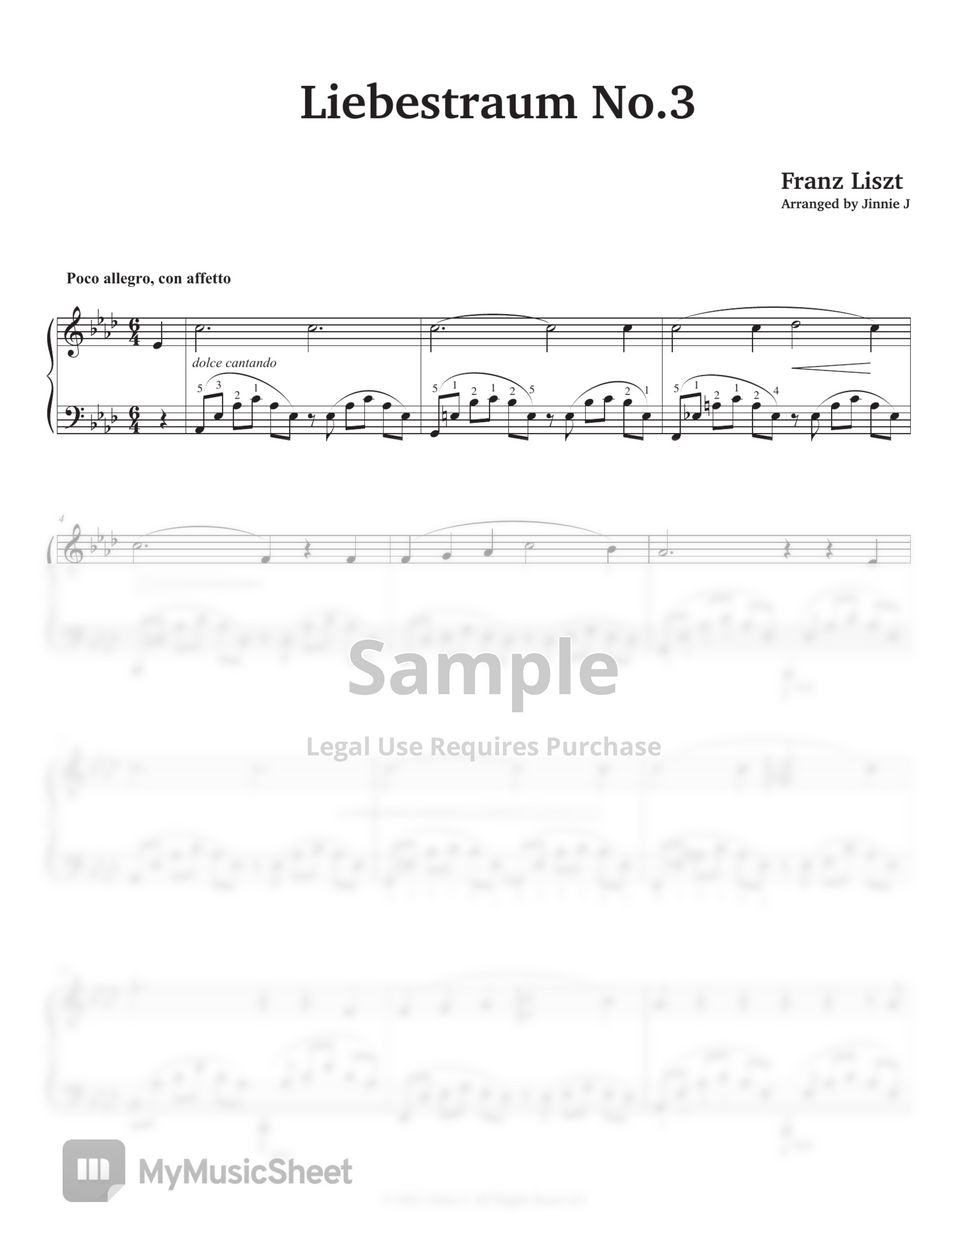 F. Liszt (리스트) - Liebestraum No. 3 (사랑의 꿈) (Intermediate Level) by Jinnie J